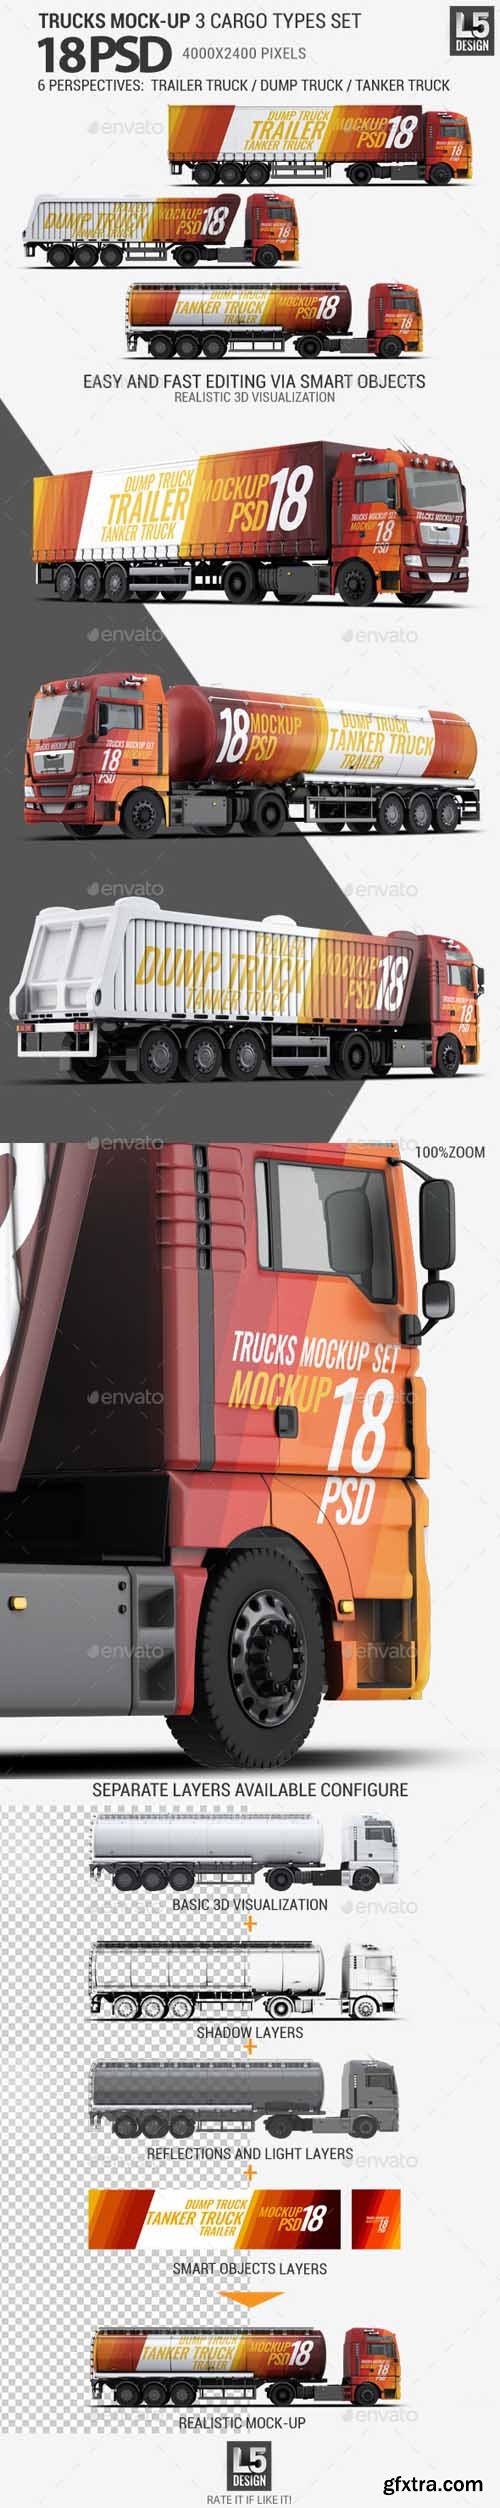 GR - Trucks Mock-up 3 Cargo Types Set 12463437